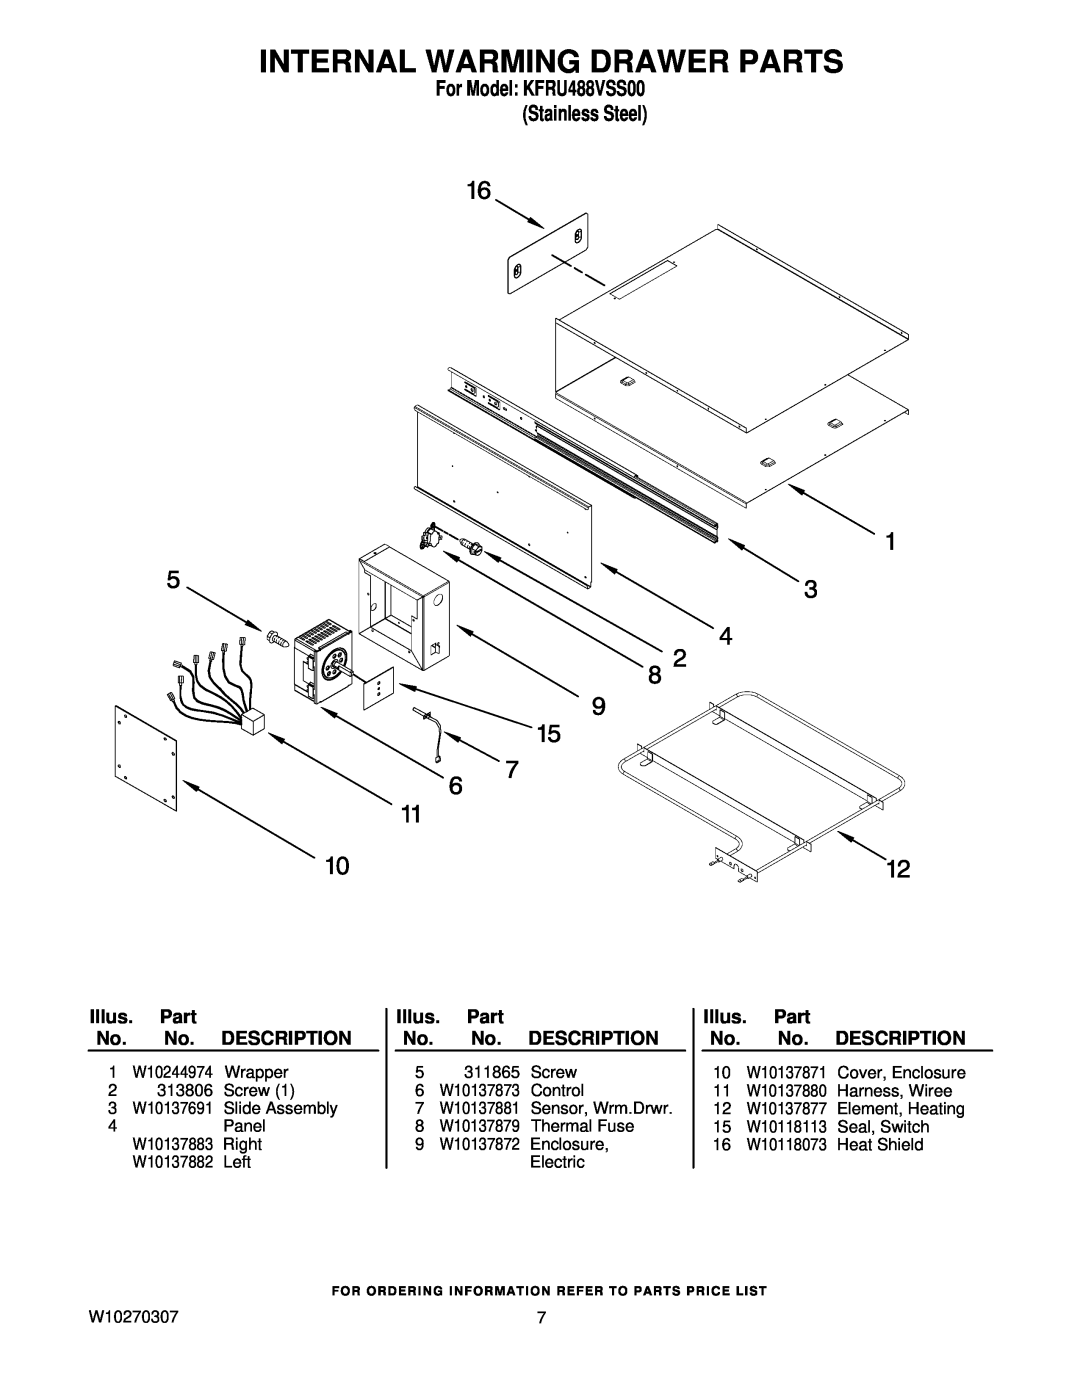 KitchenAid manual Internal Warming Drawer Parts, For Model KFRU488VSS00 Stainless Steel, Illus. Part No. No. DESCRIPTION 